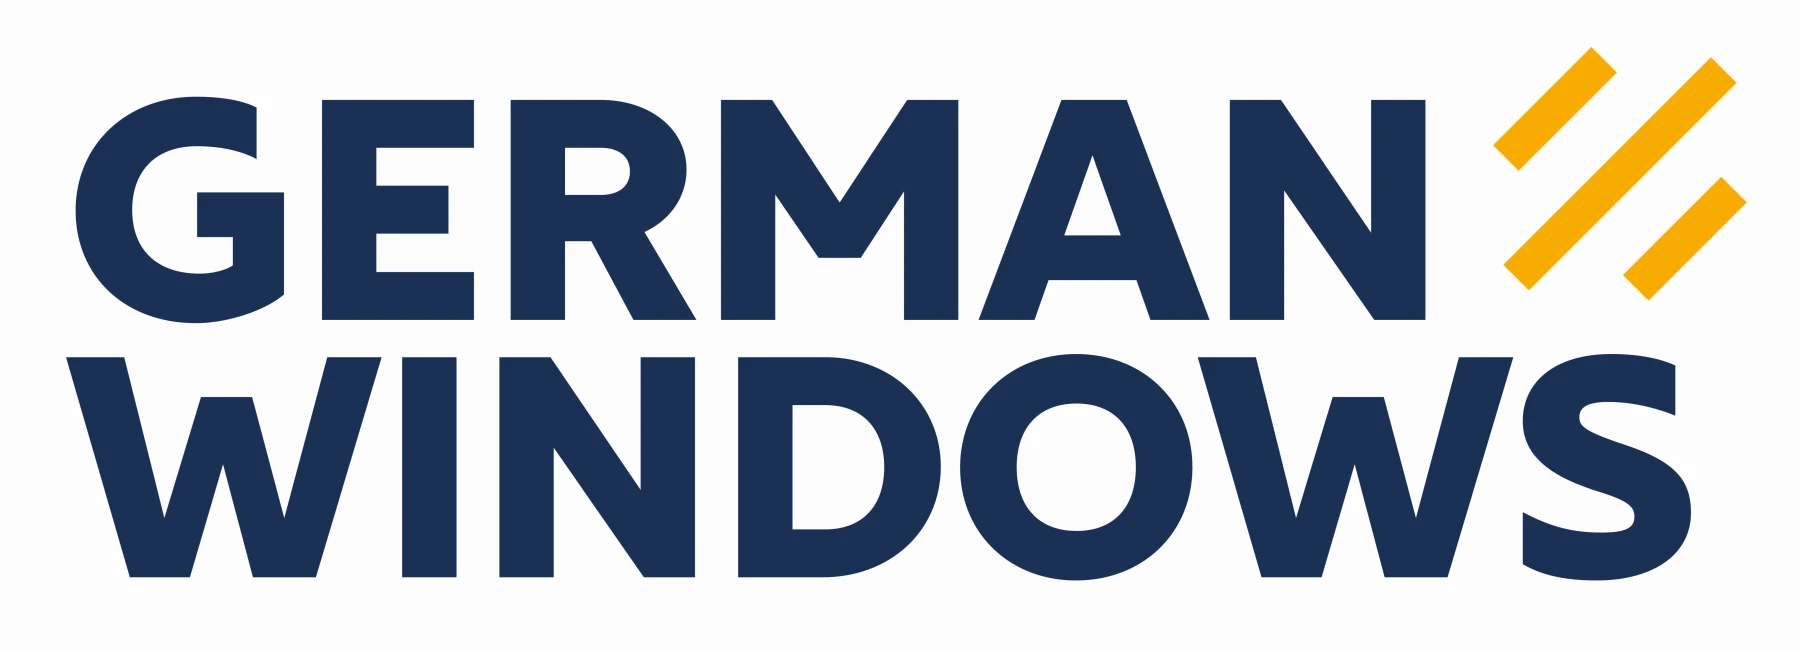 German windows logo